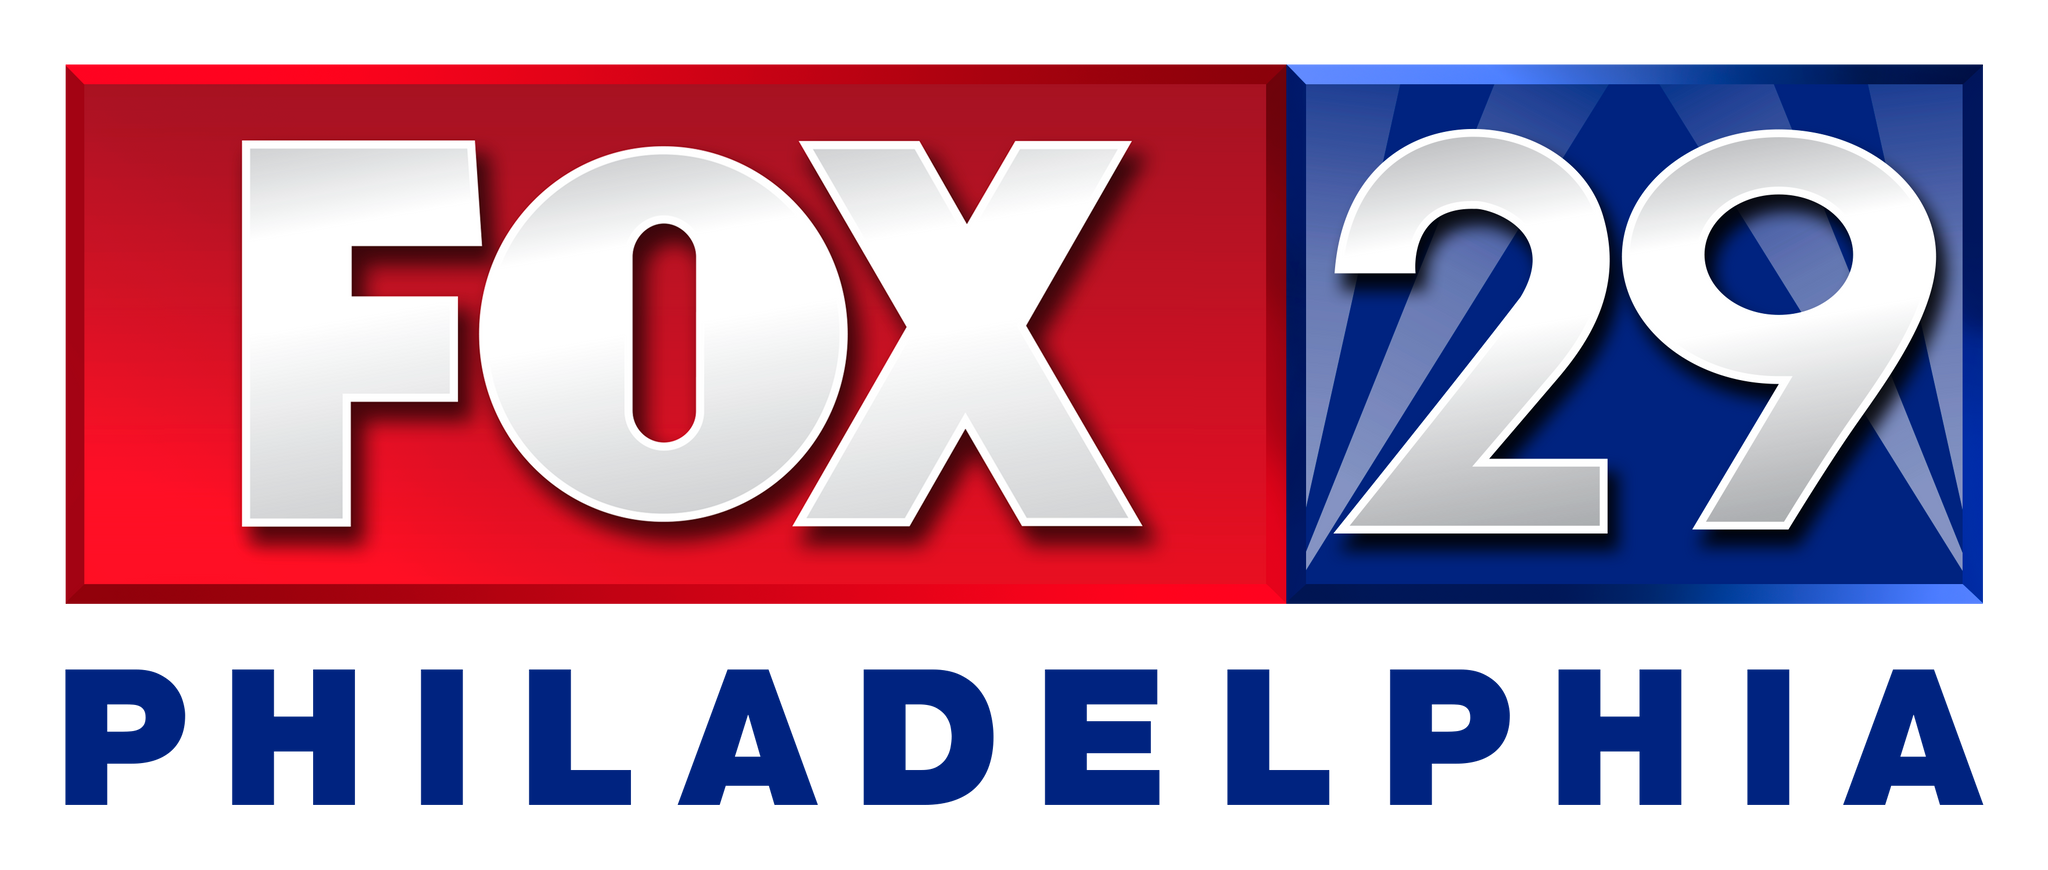 Fox канал прямой